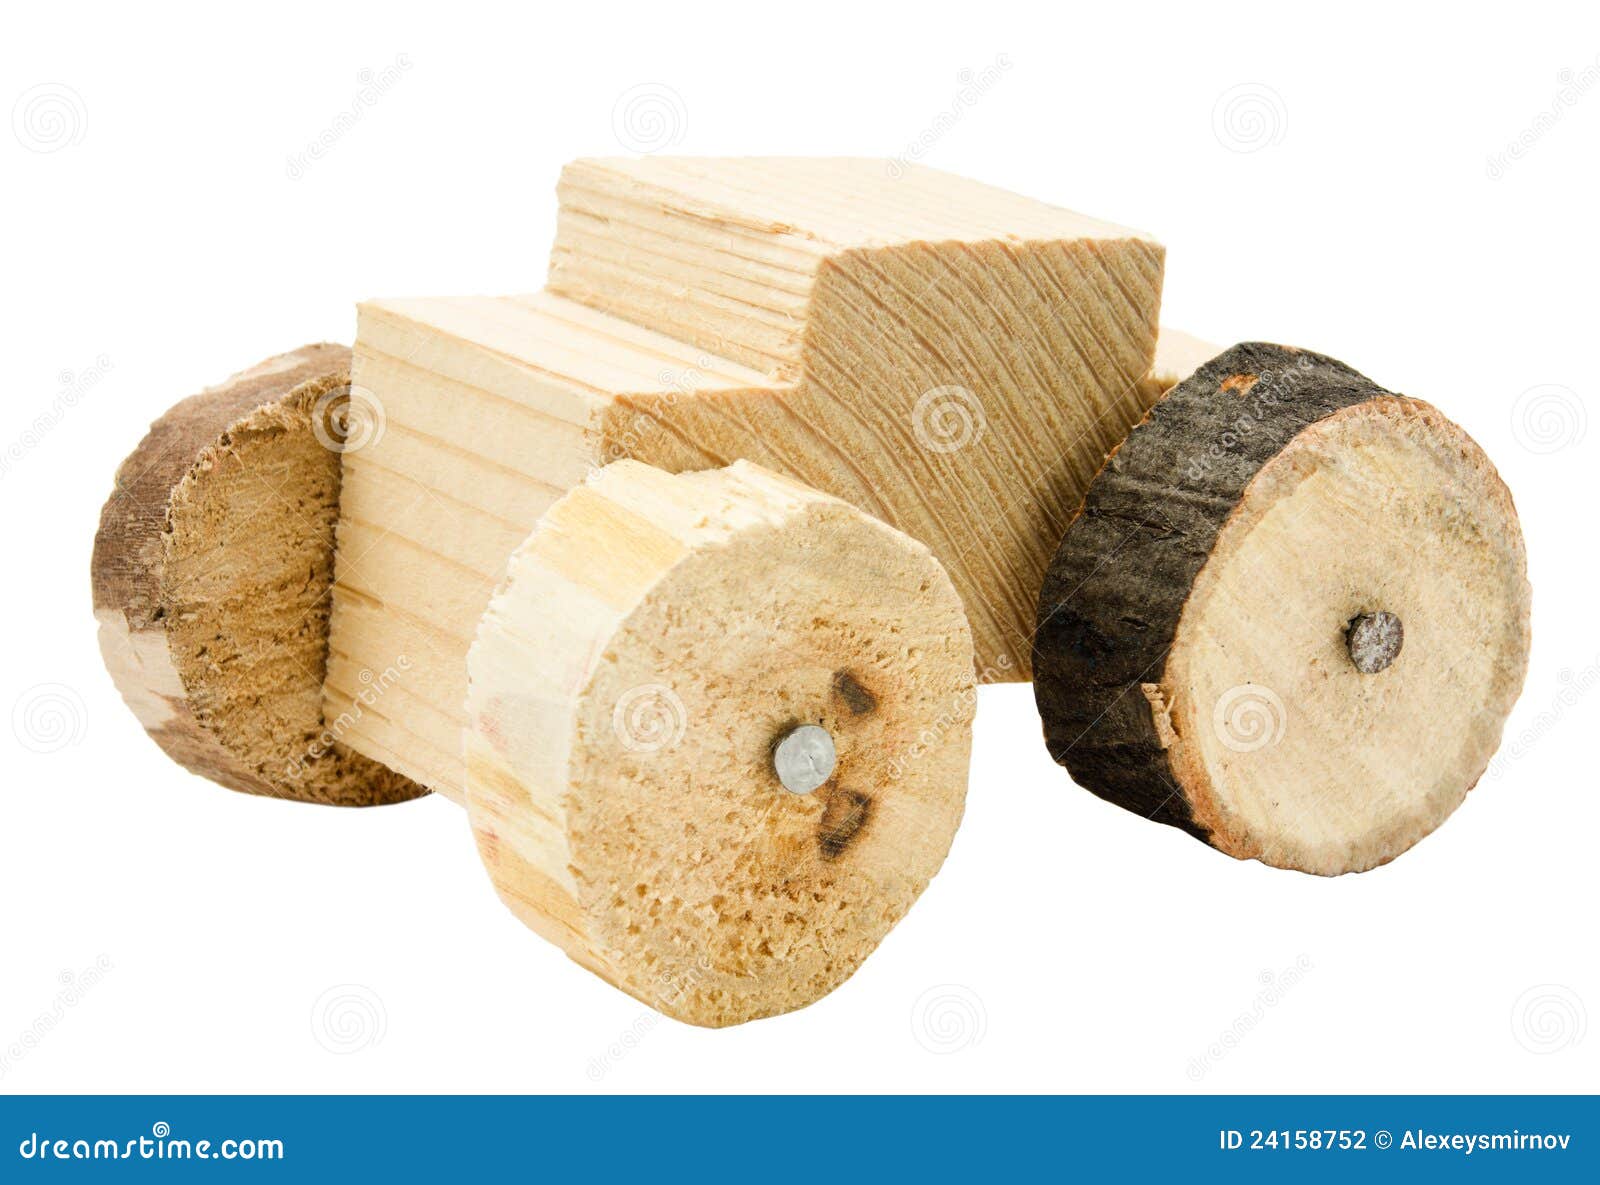 Homemade Wood Toys 42